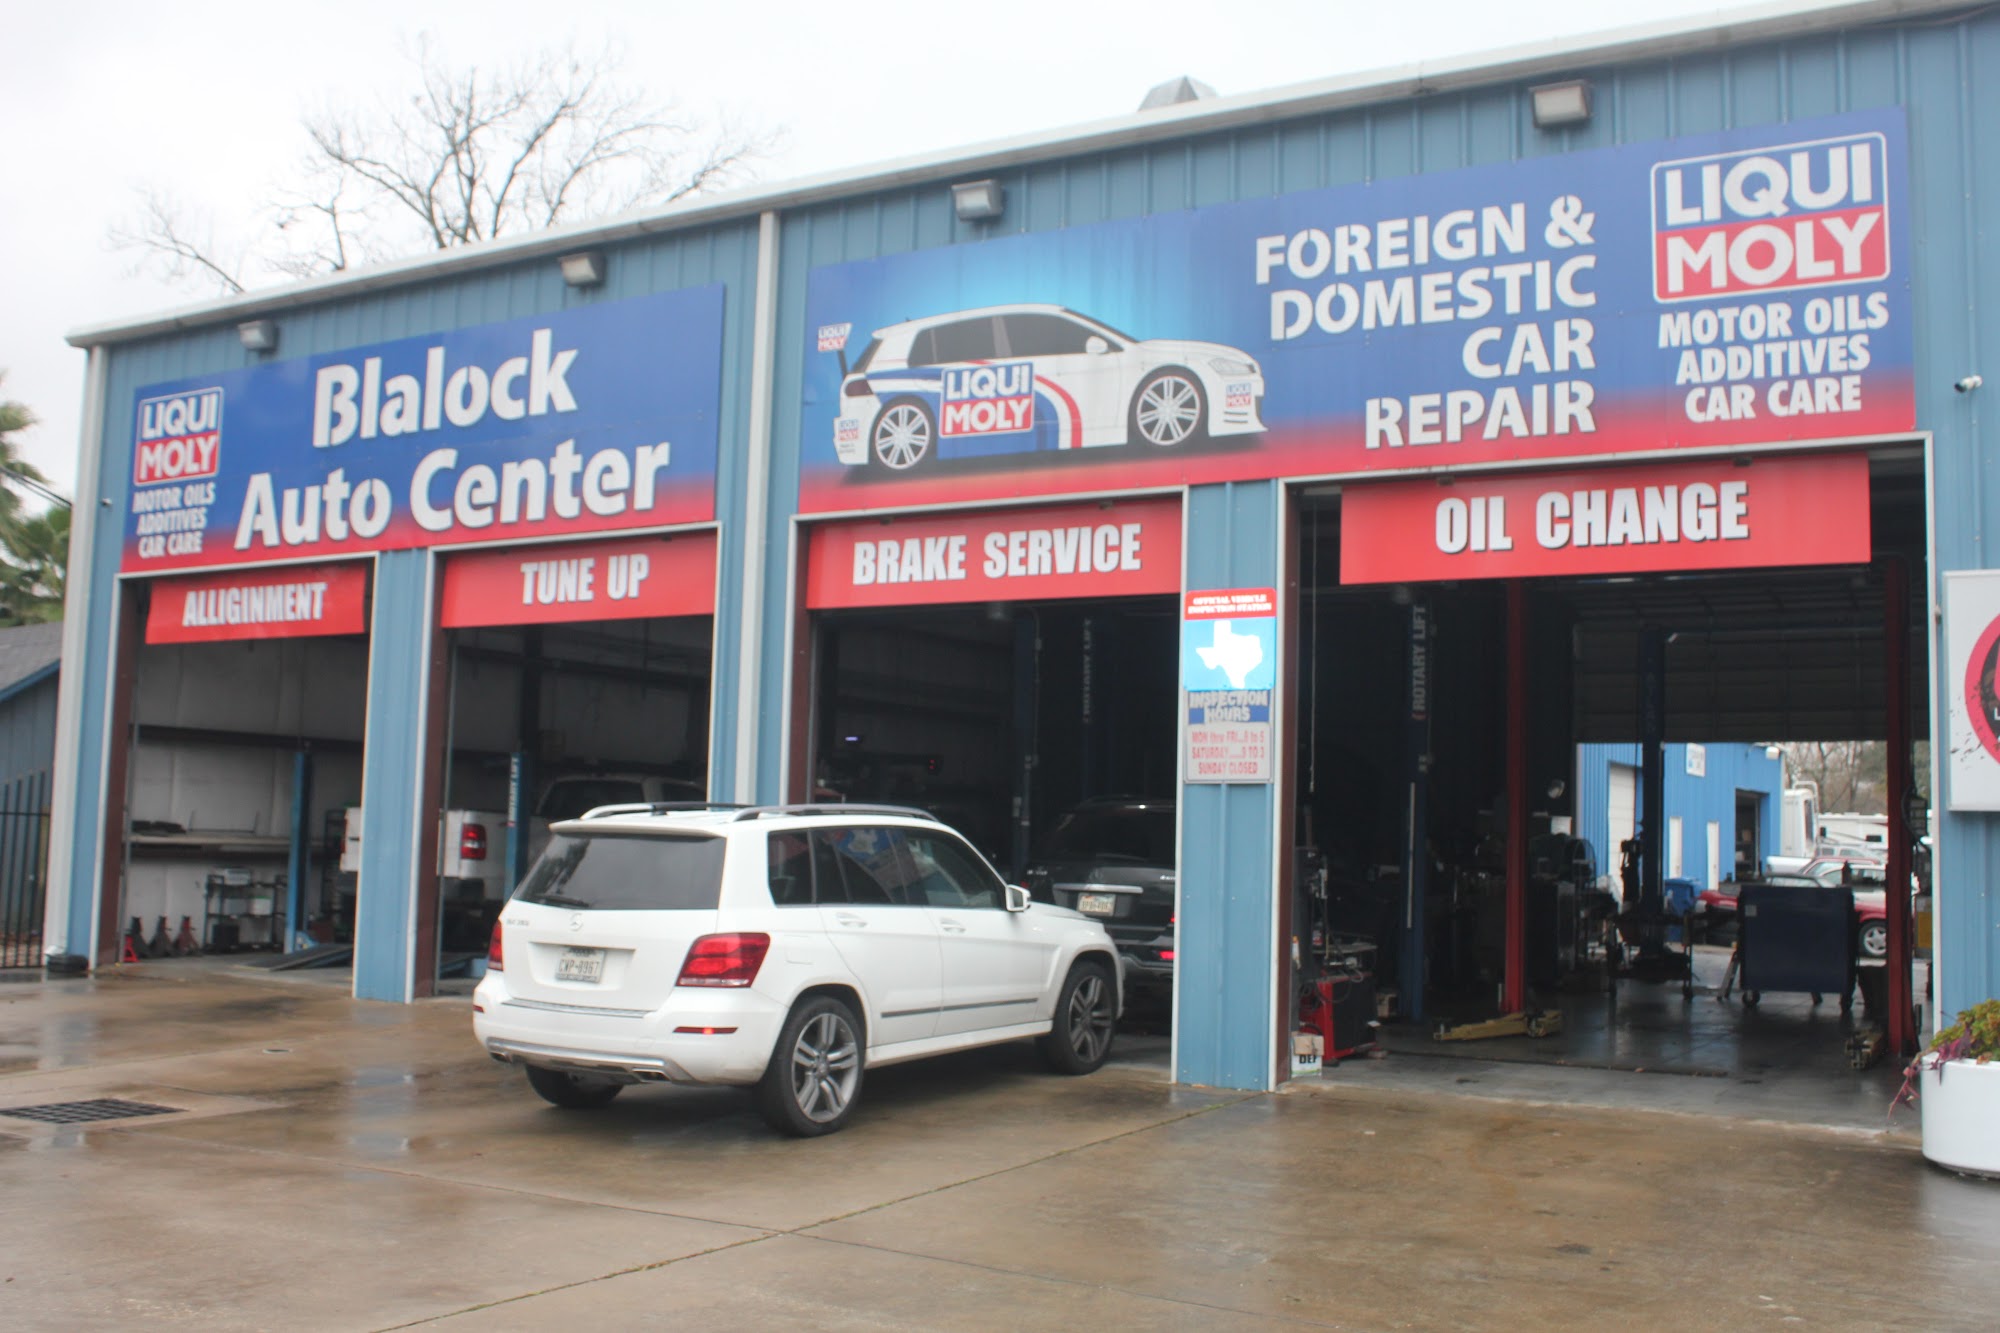 Blalock Auto Center and Collision - Complete Auto Repair, Paint & Body Shop, Lift Kits & Accessories